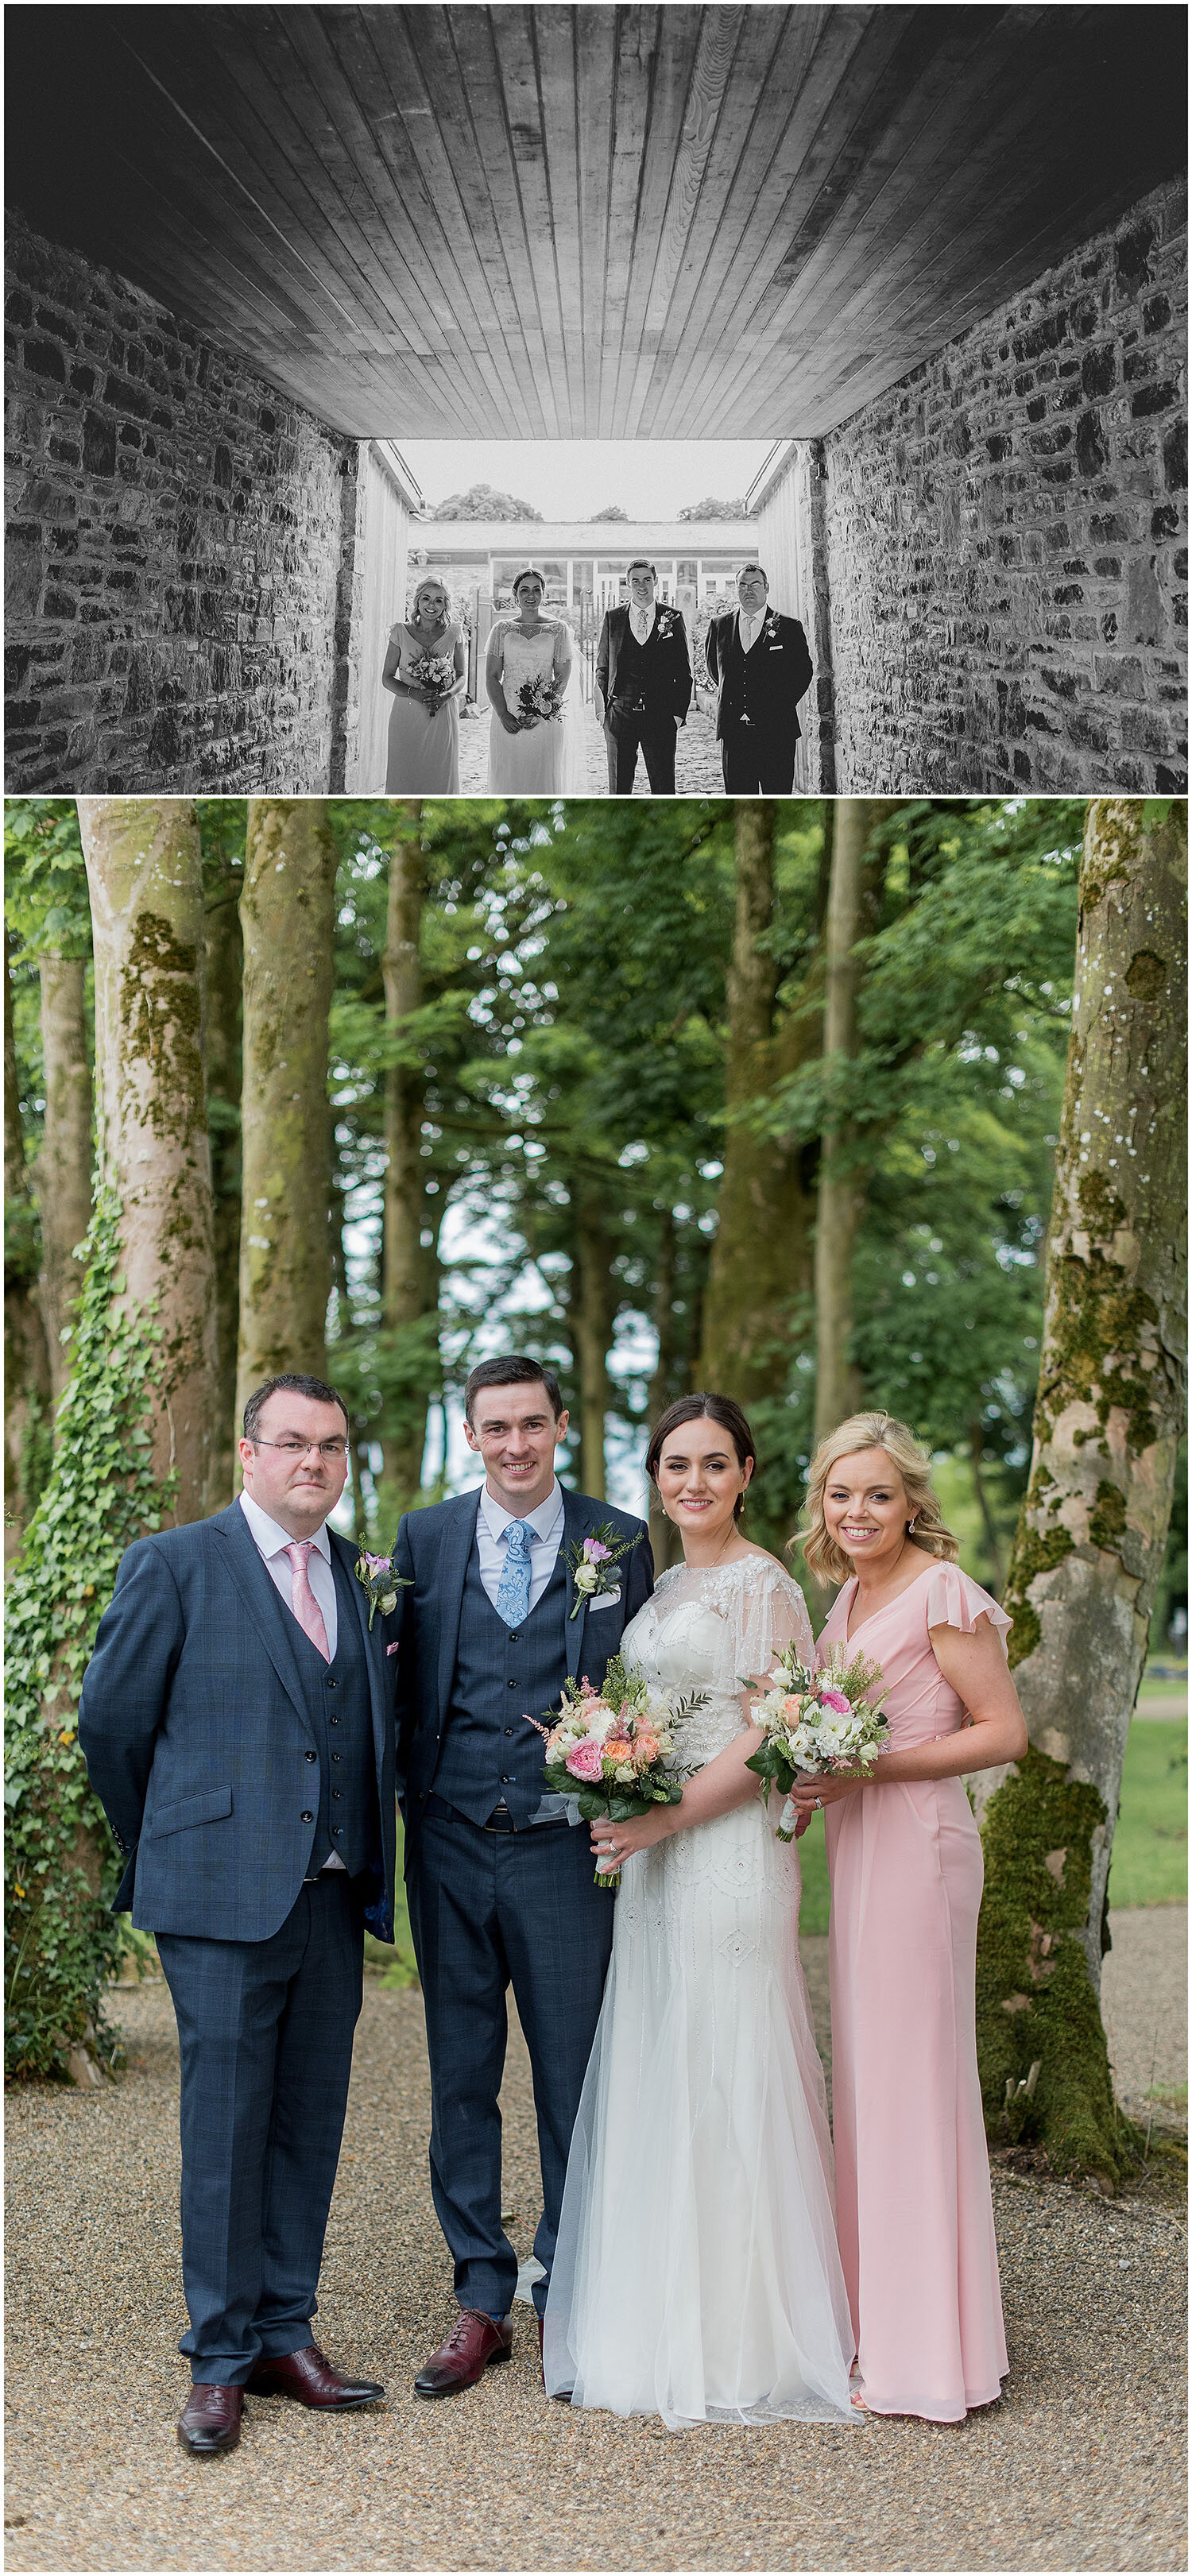 Sean & Kaye's Wedding Day at Clonabreany House_0045.jpg